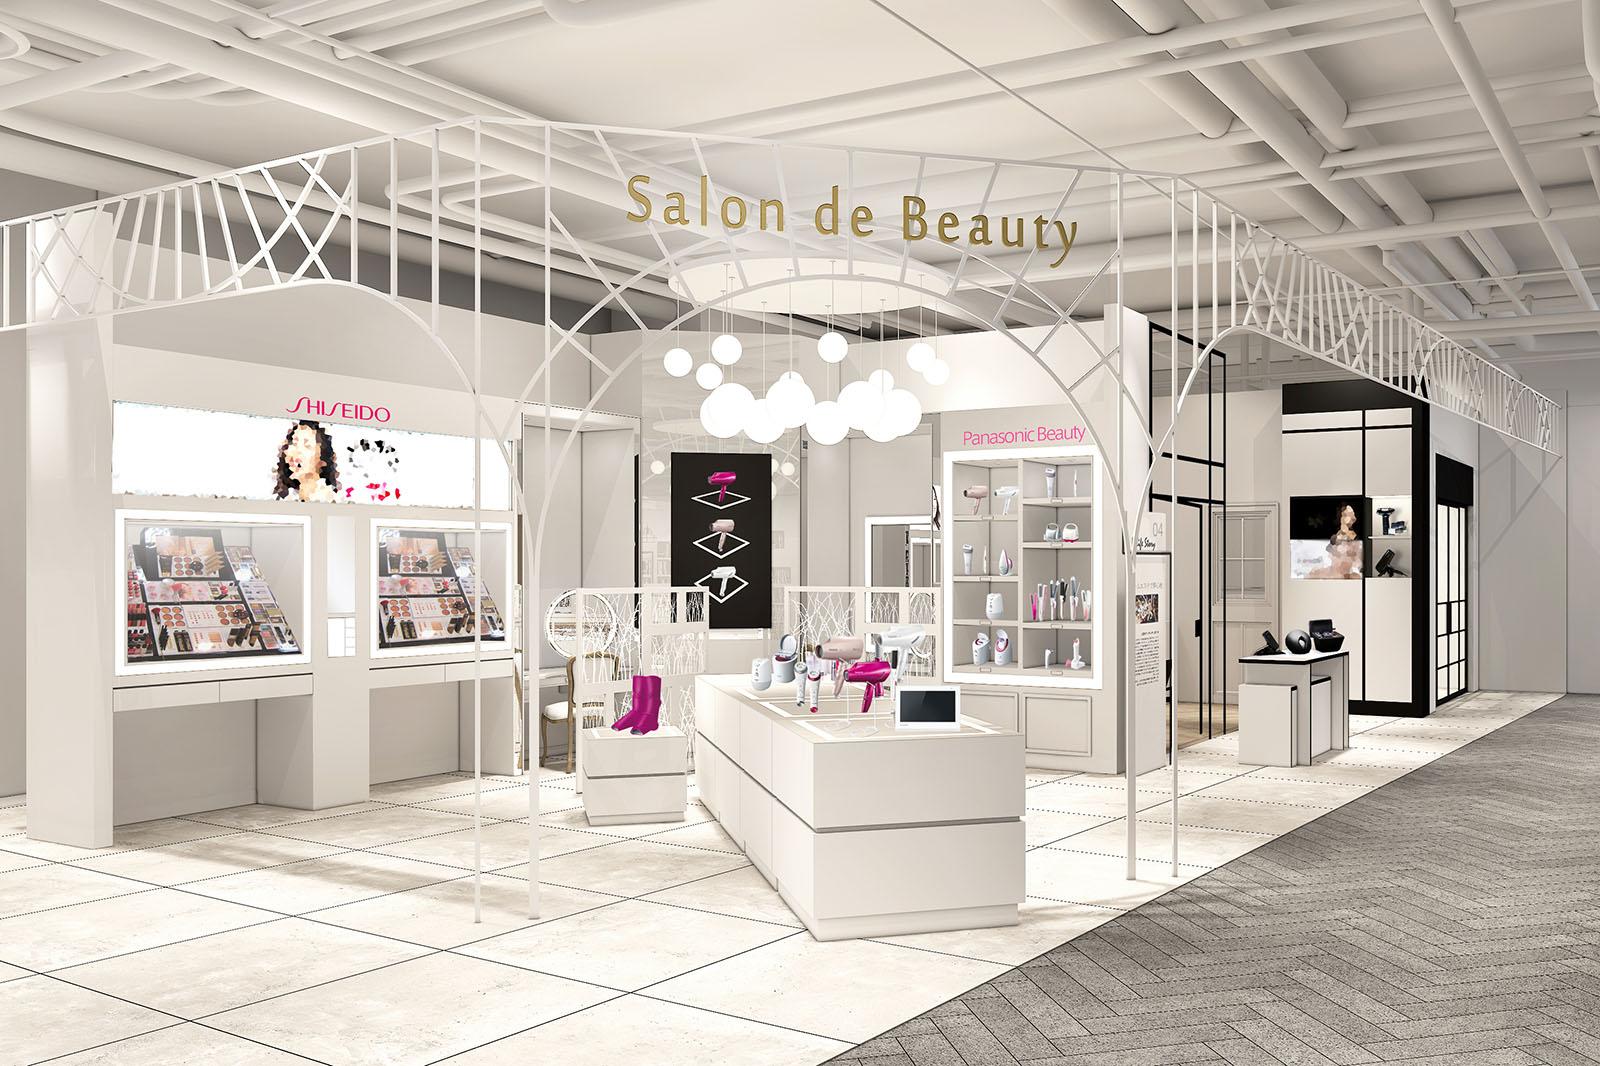 Salon de Beauty